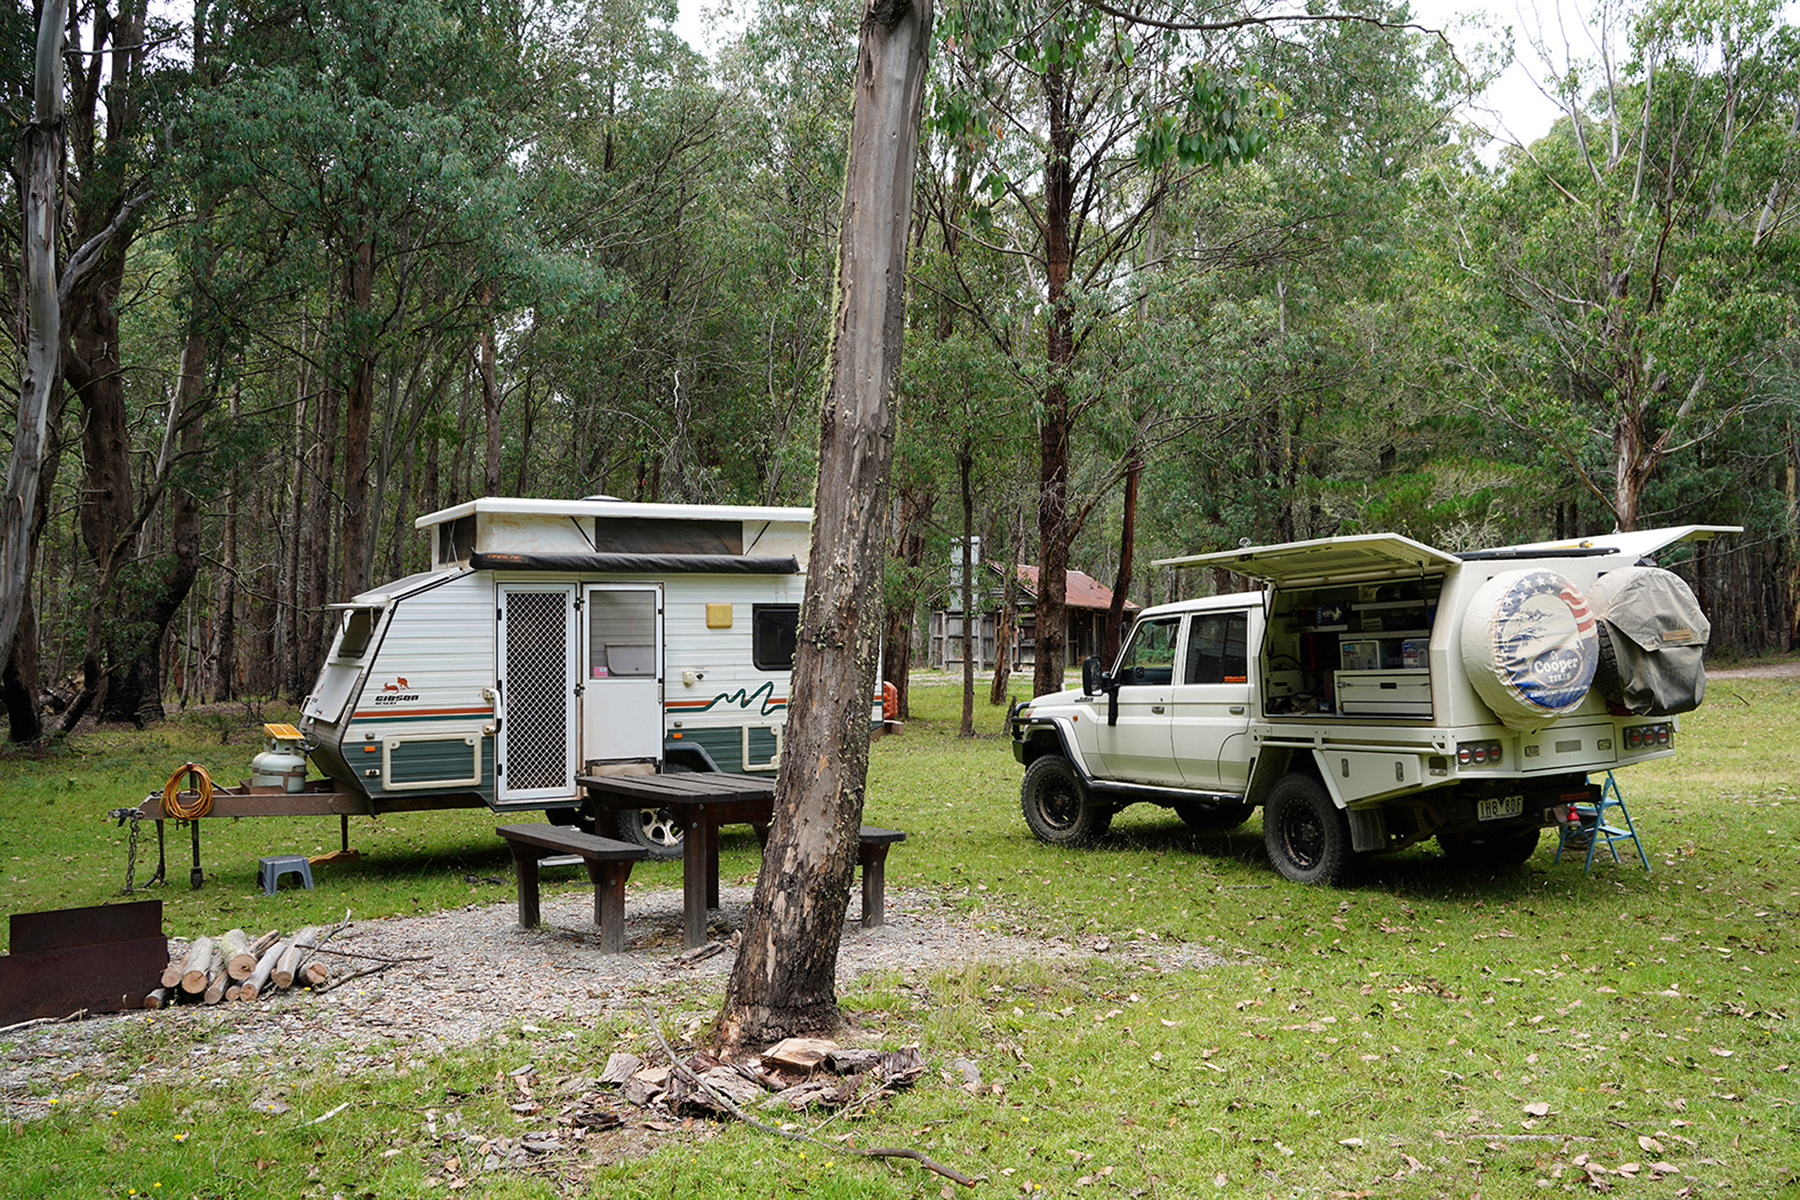 A campsite with a caravan and a car